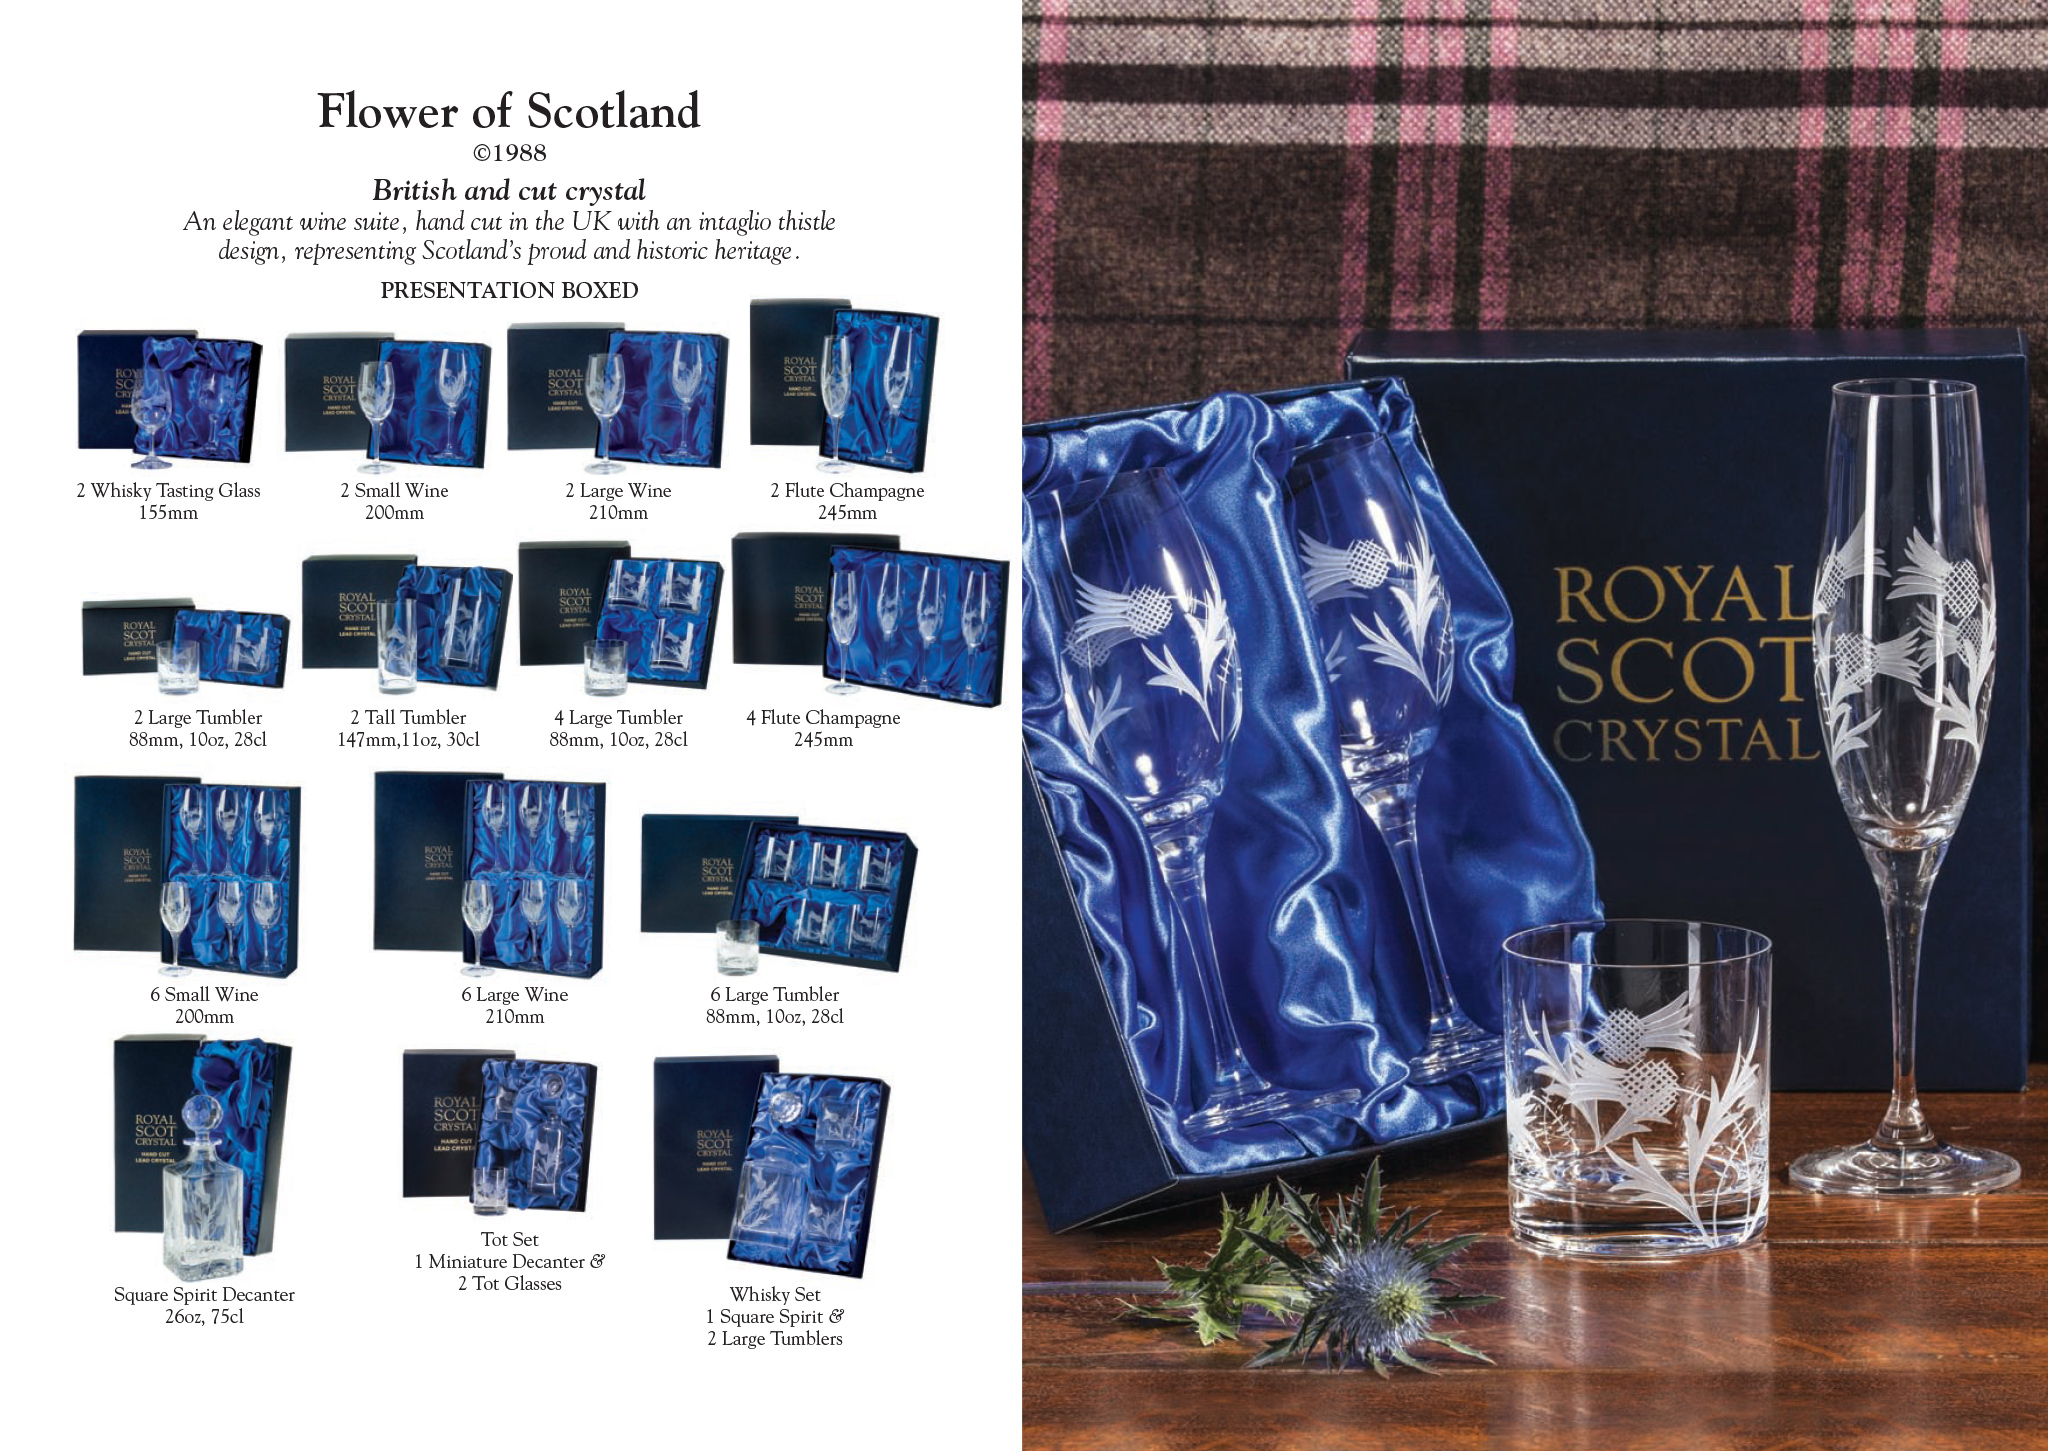 Royal Scot Crystal - Flower of Scotland